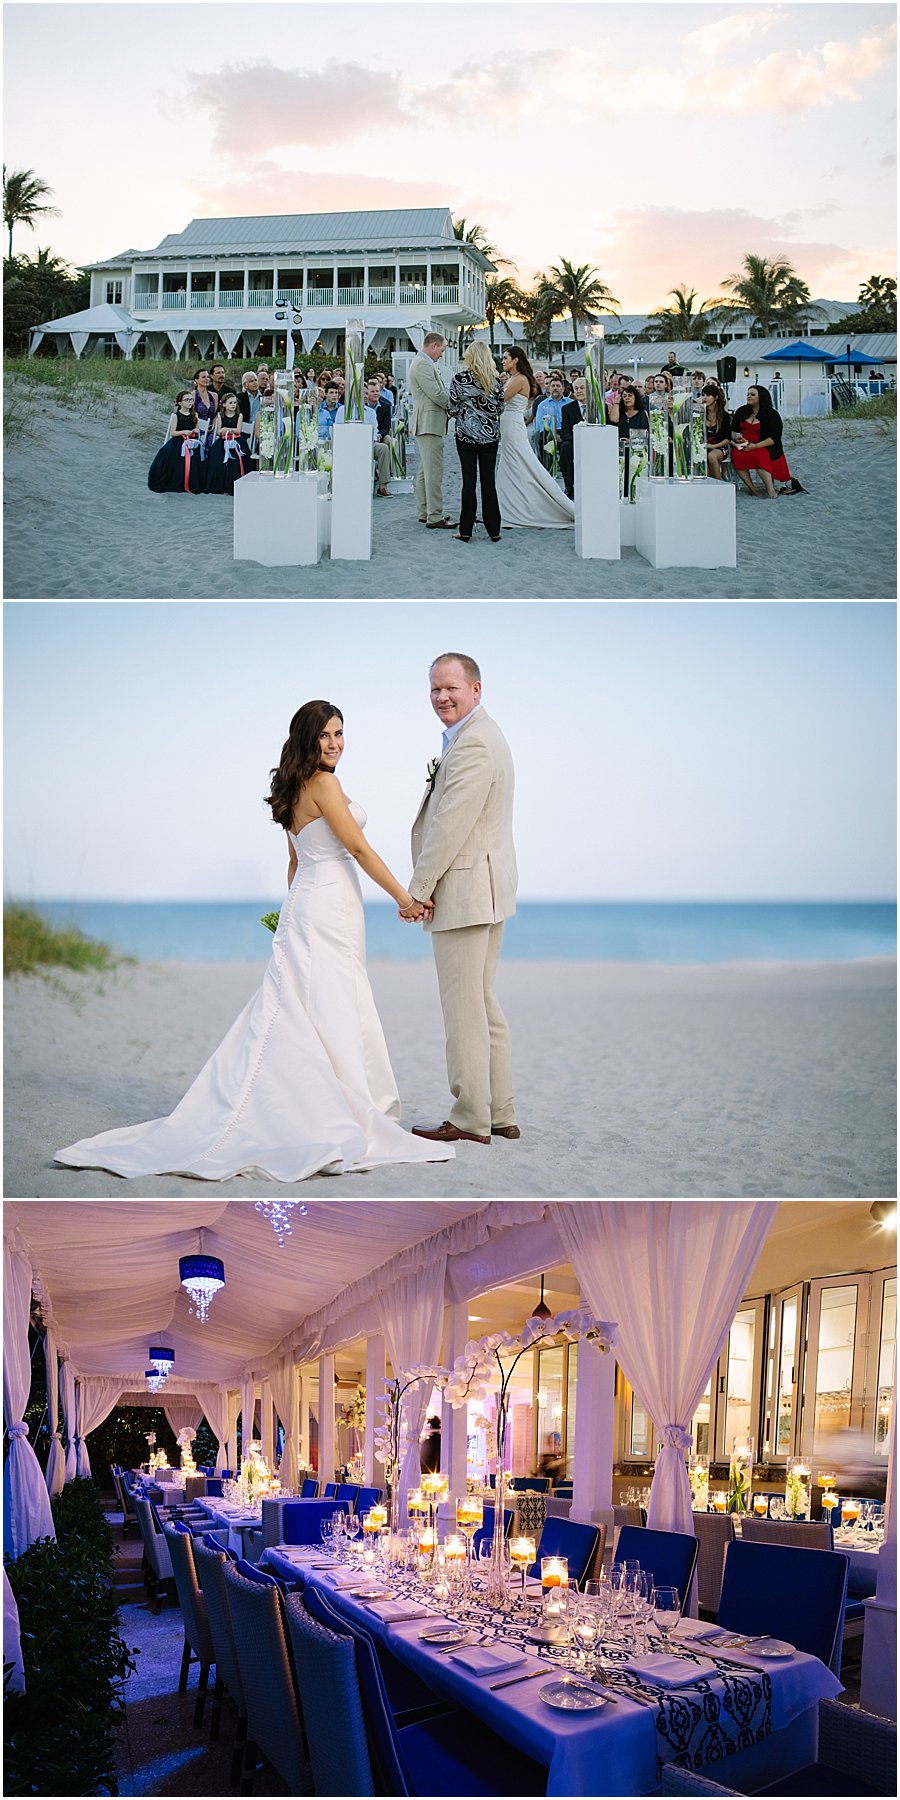 Seagate Beach Club | Top Palm Beach Wedding Venue | Married in Palm Beach | www.marriedinpalmbeach.com | The Harmons Photography